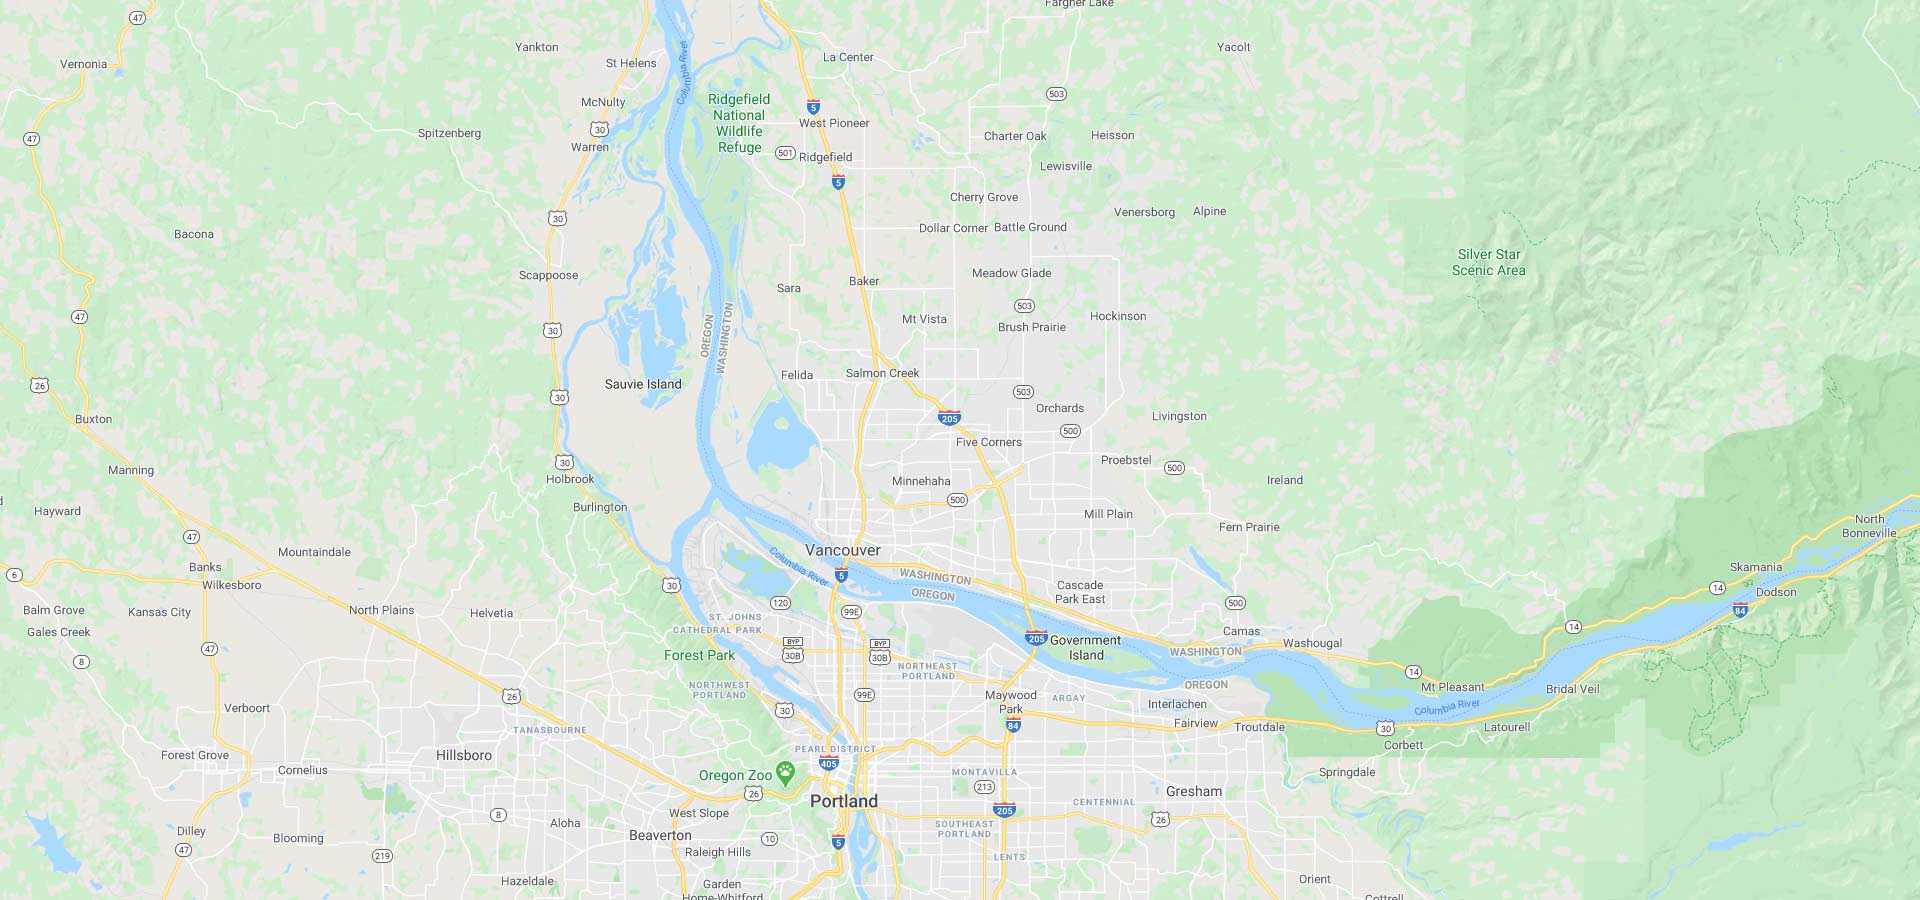 Vancouver, WA area map.